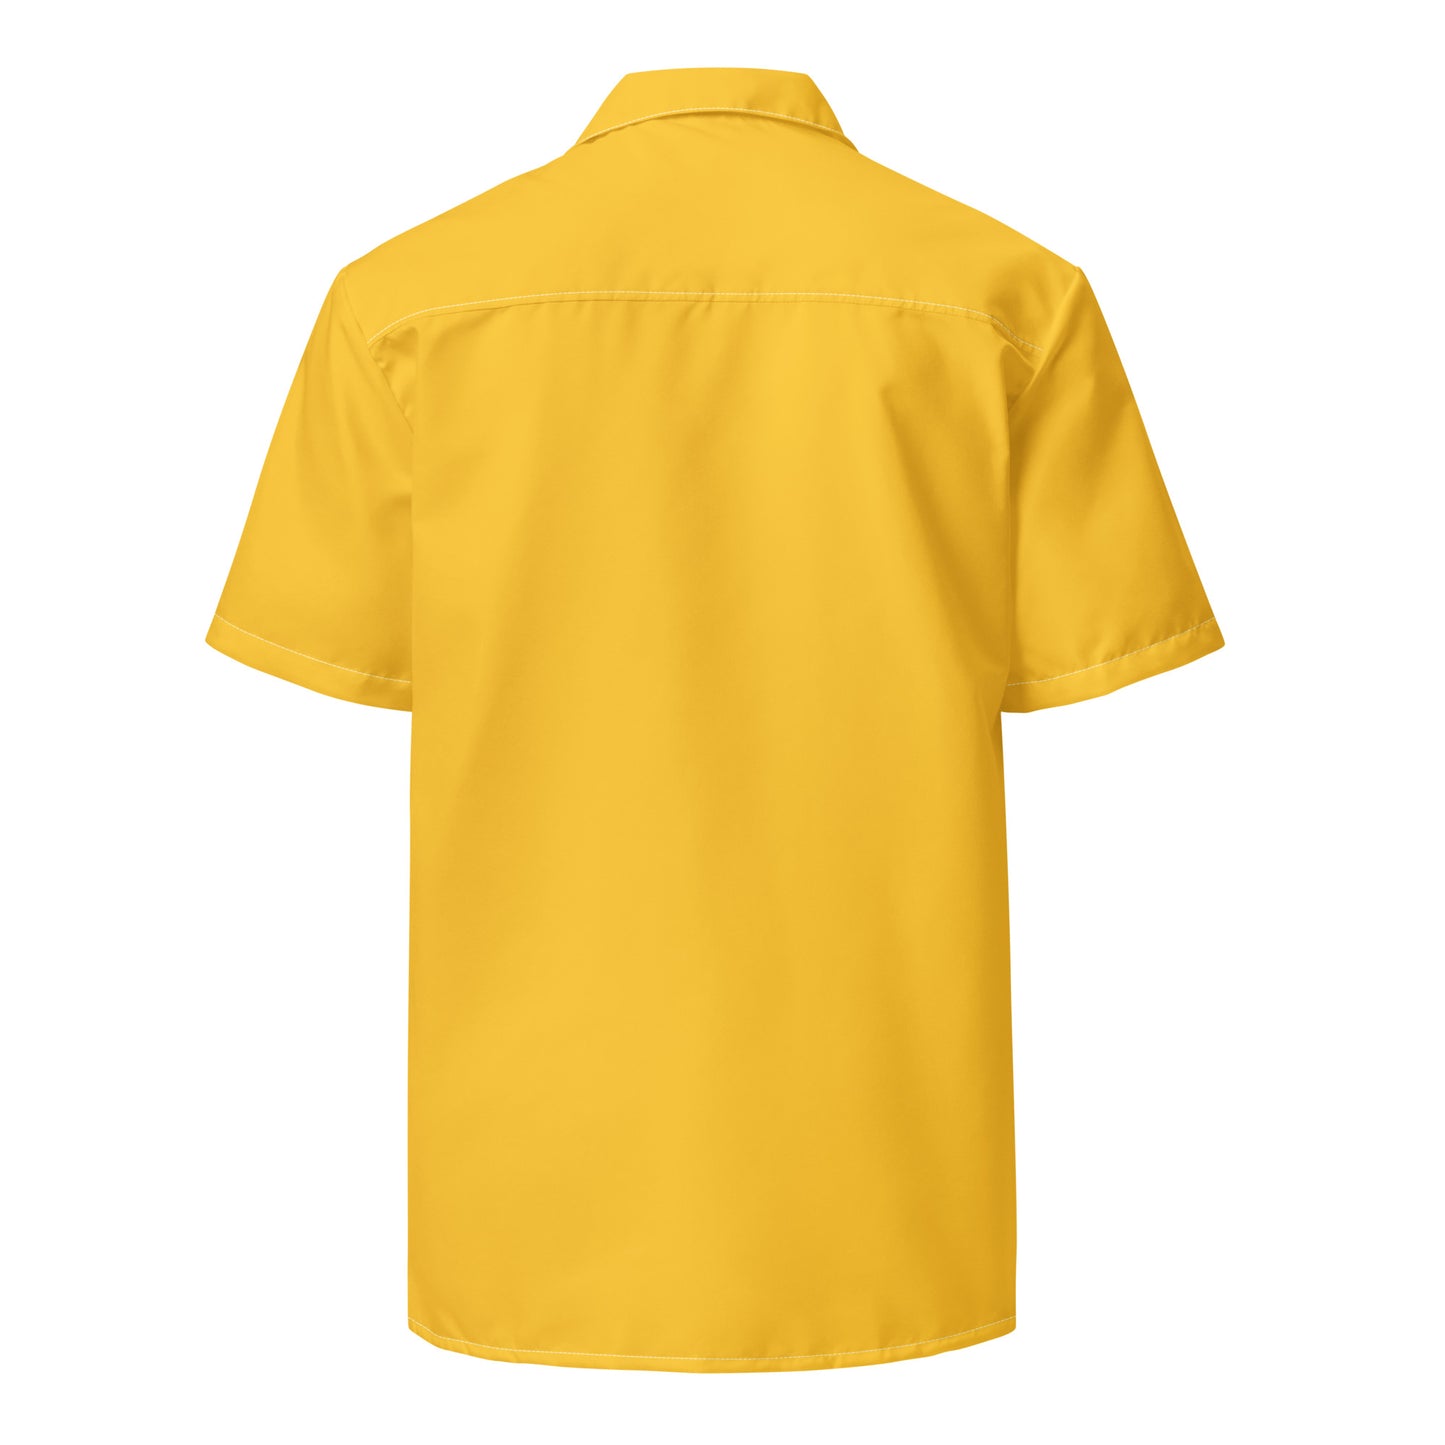 Unisex Sunny Yellow Peaceful button shirt